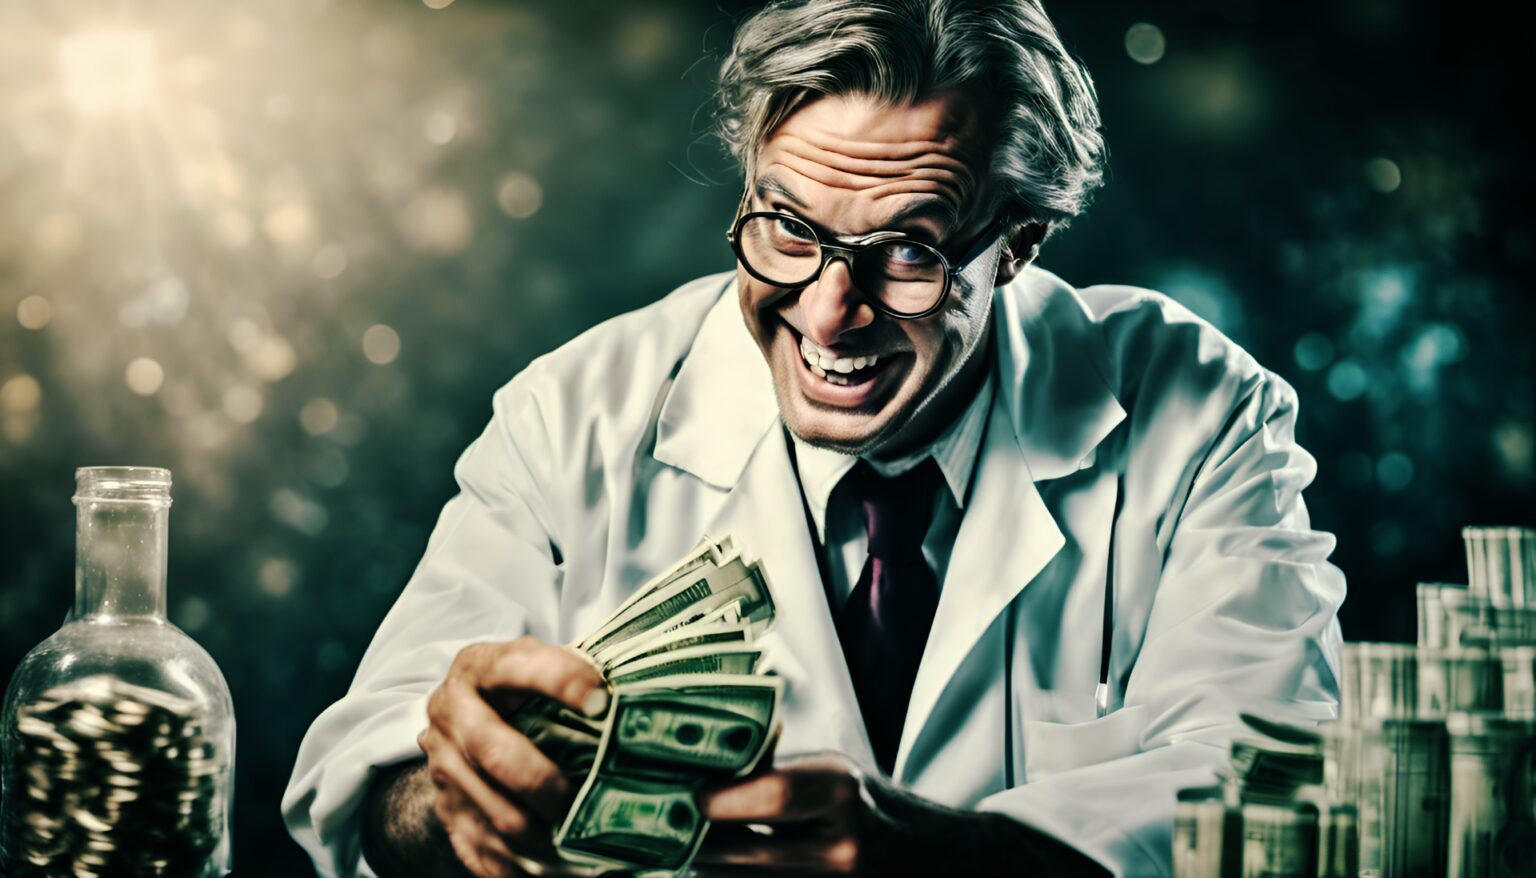 Evil scientist with money